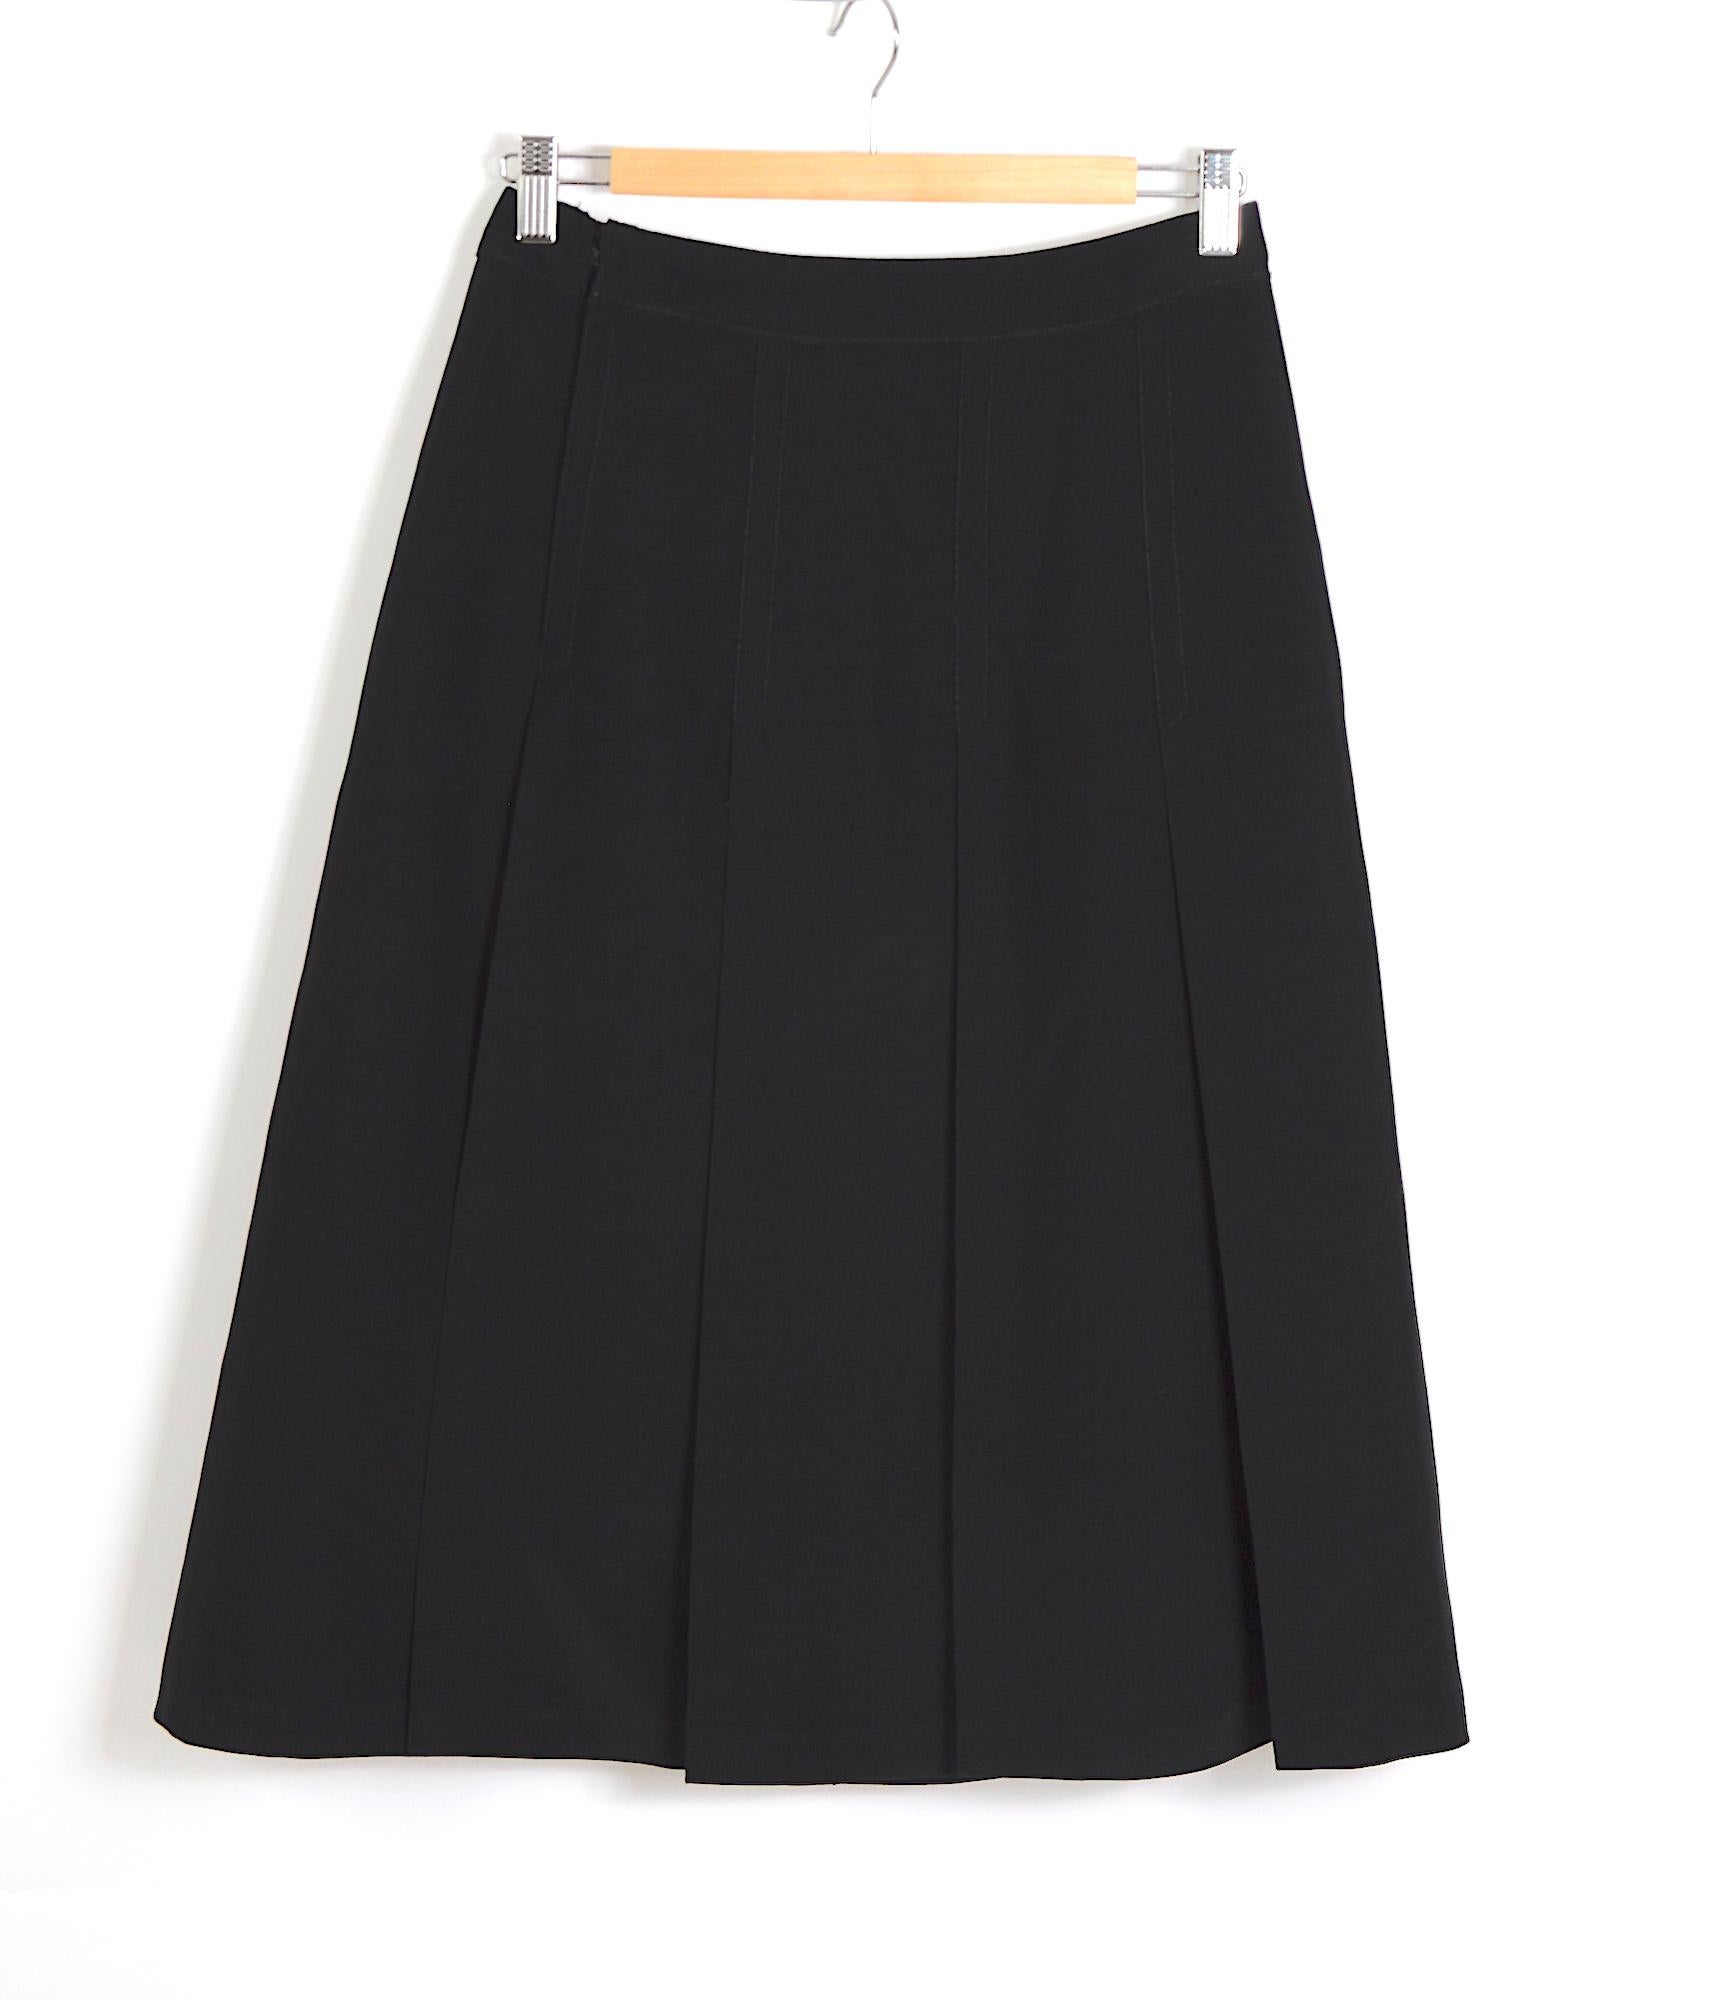 Céline Paris vintage 1980s black pleated skirt. For Sale at 1stDibs